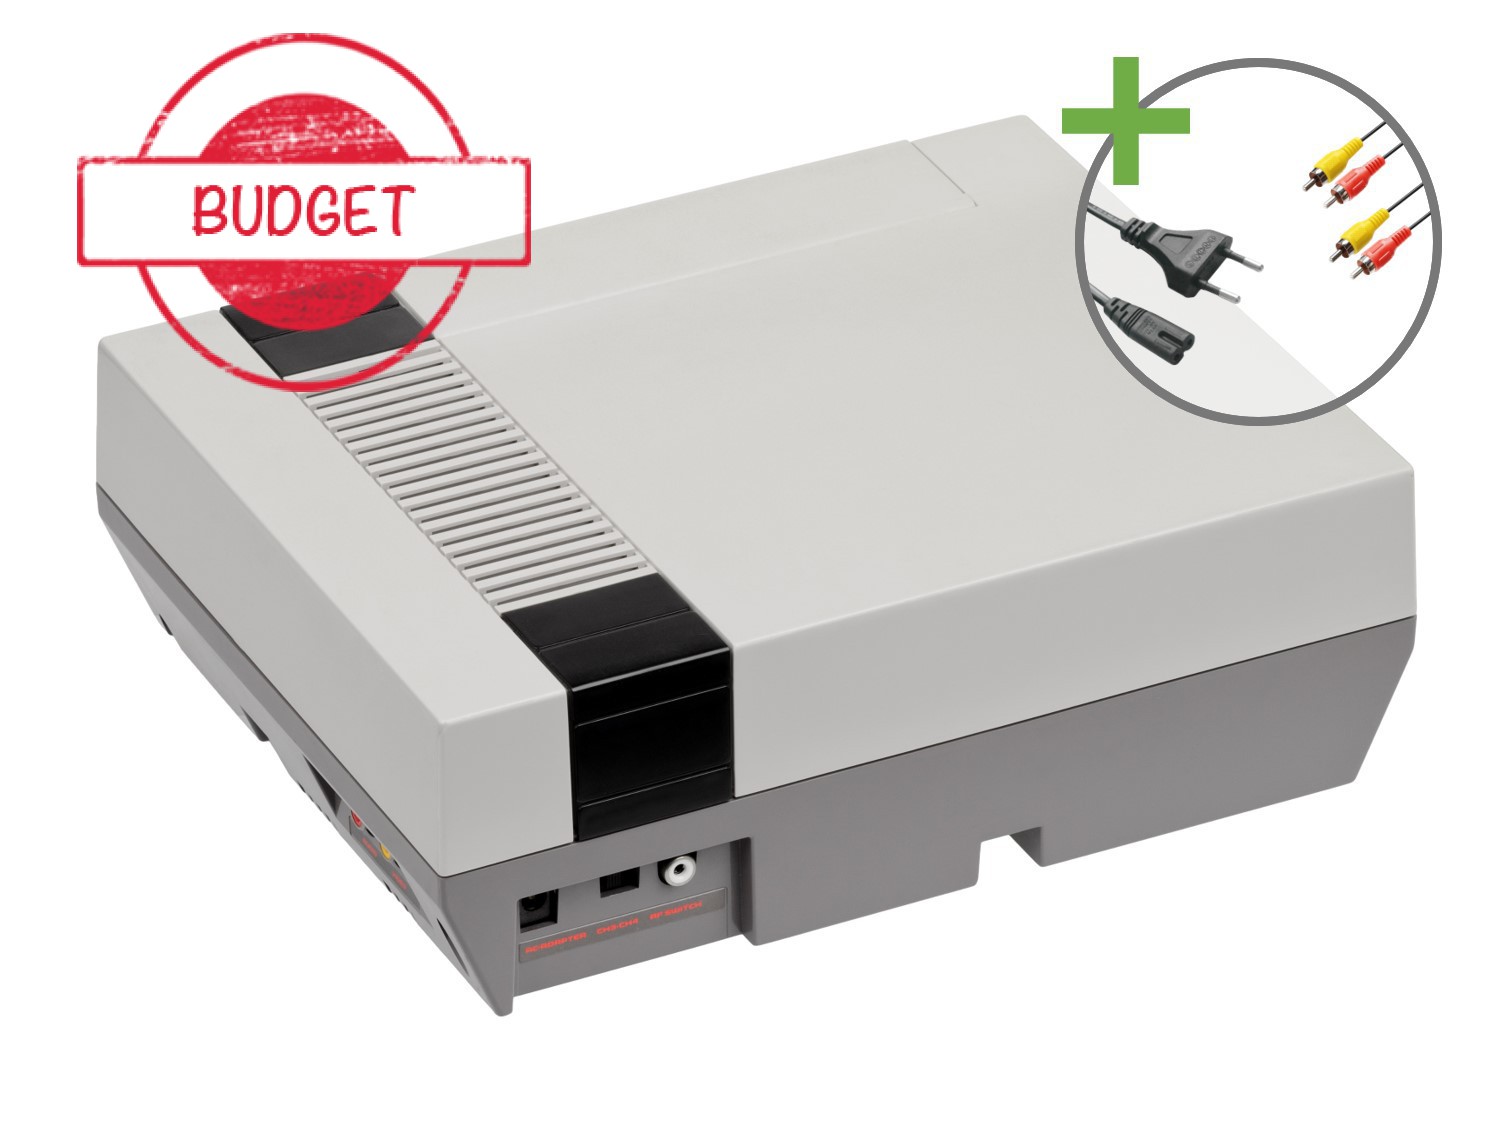 Nintendo NES Starter Pack - Action Set - Budget - Nintendo NES Hardware - 3